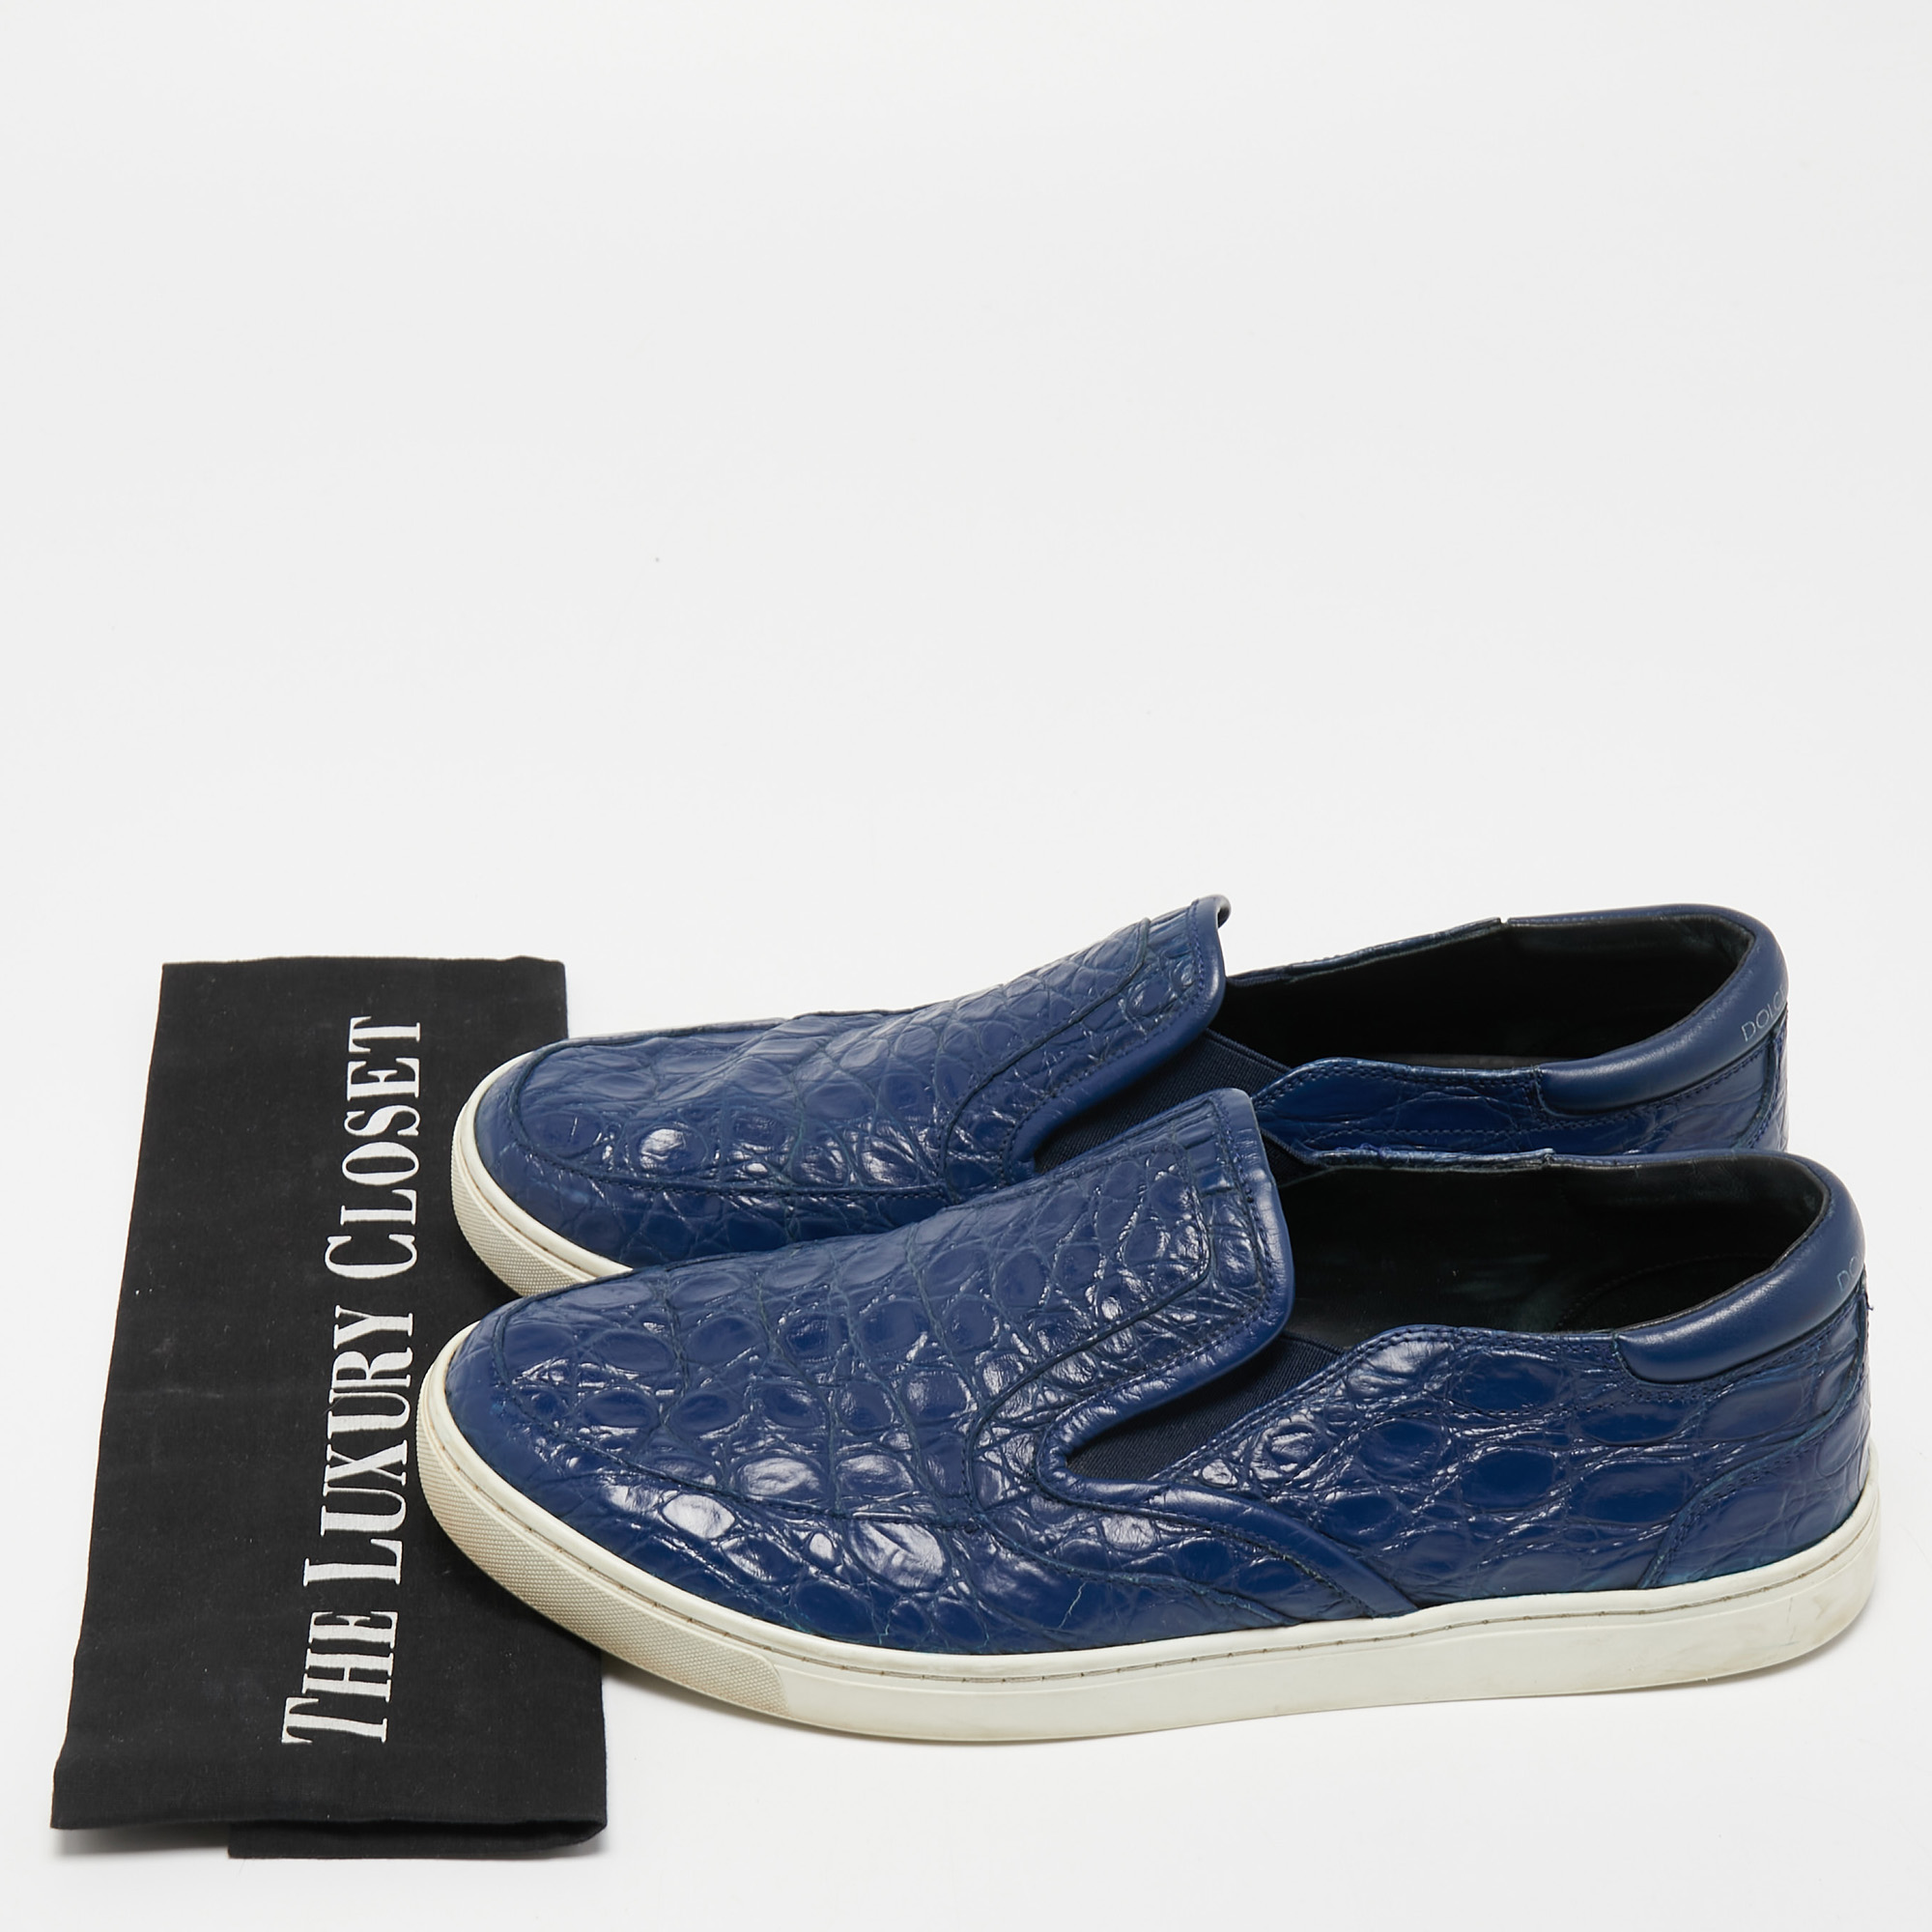 Dolce & Gabbana Navy Blue Croc Embossed  Slip On Sneakers Size 41.5